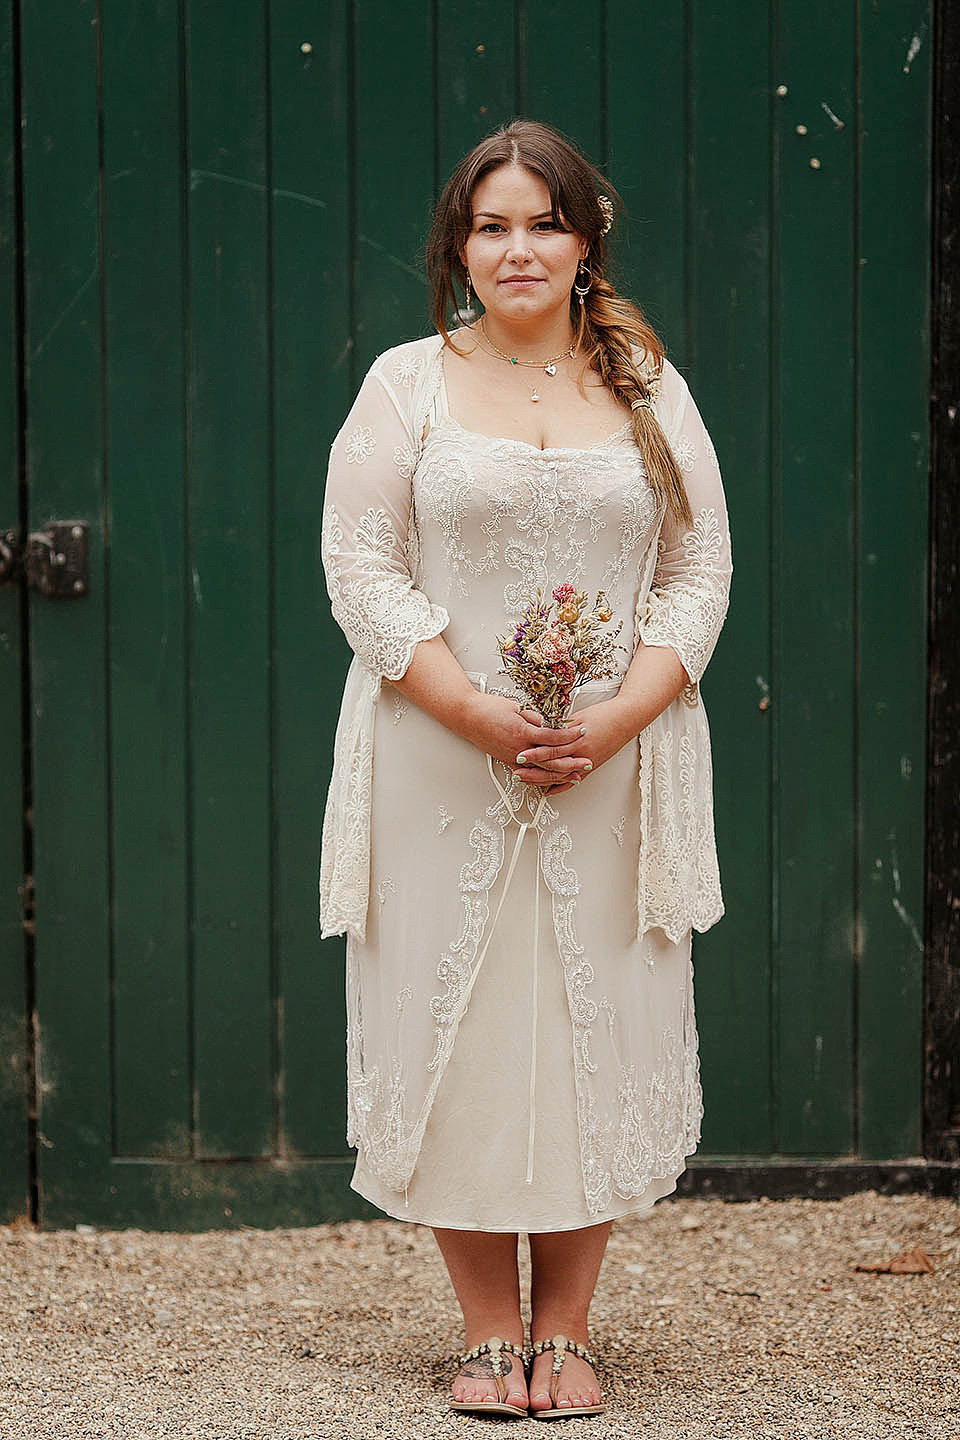 boho bride, rustic weddings, barn wedding, paul joseph photography